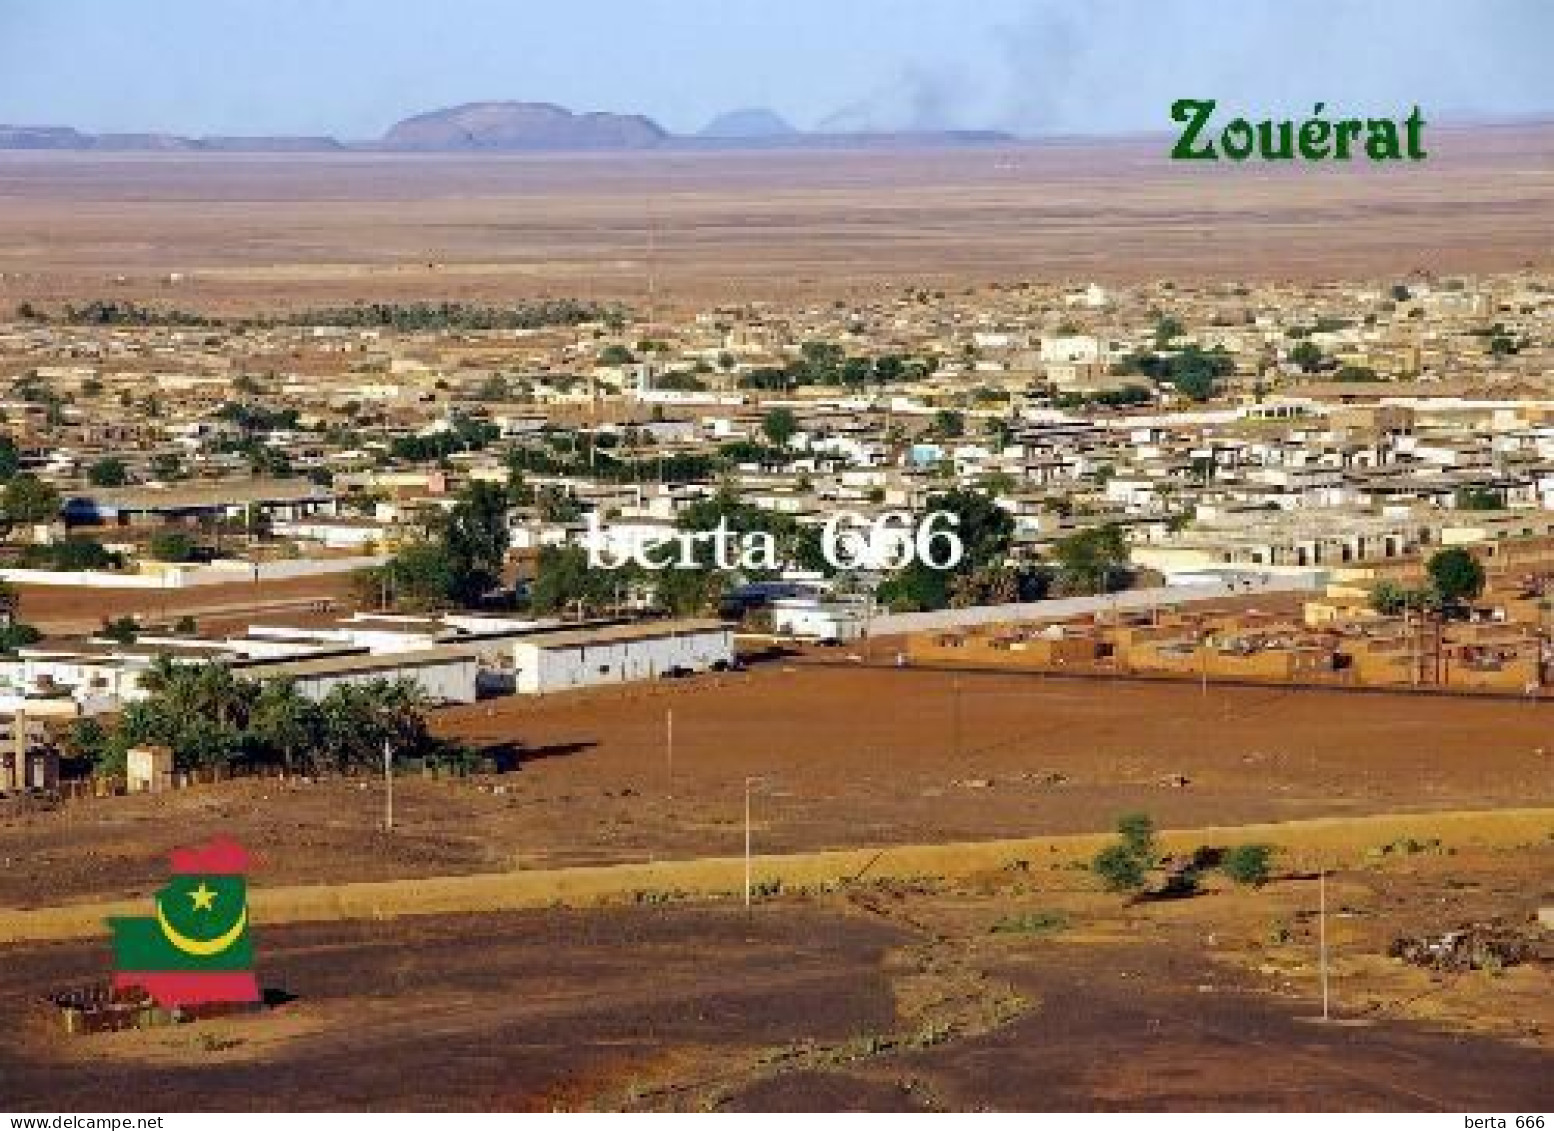 Mauritania Zouerat Overview New Postcard - Mauritanie